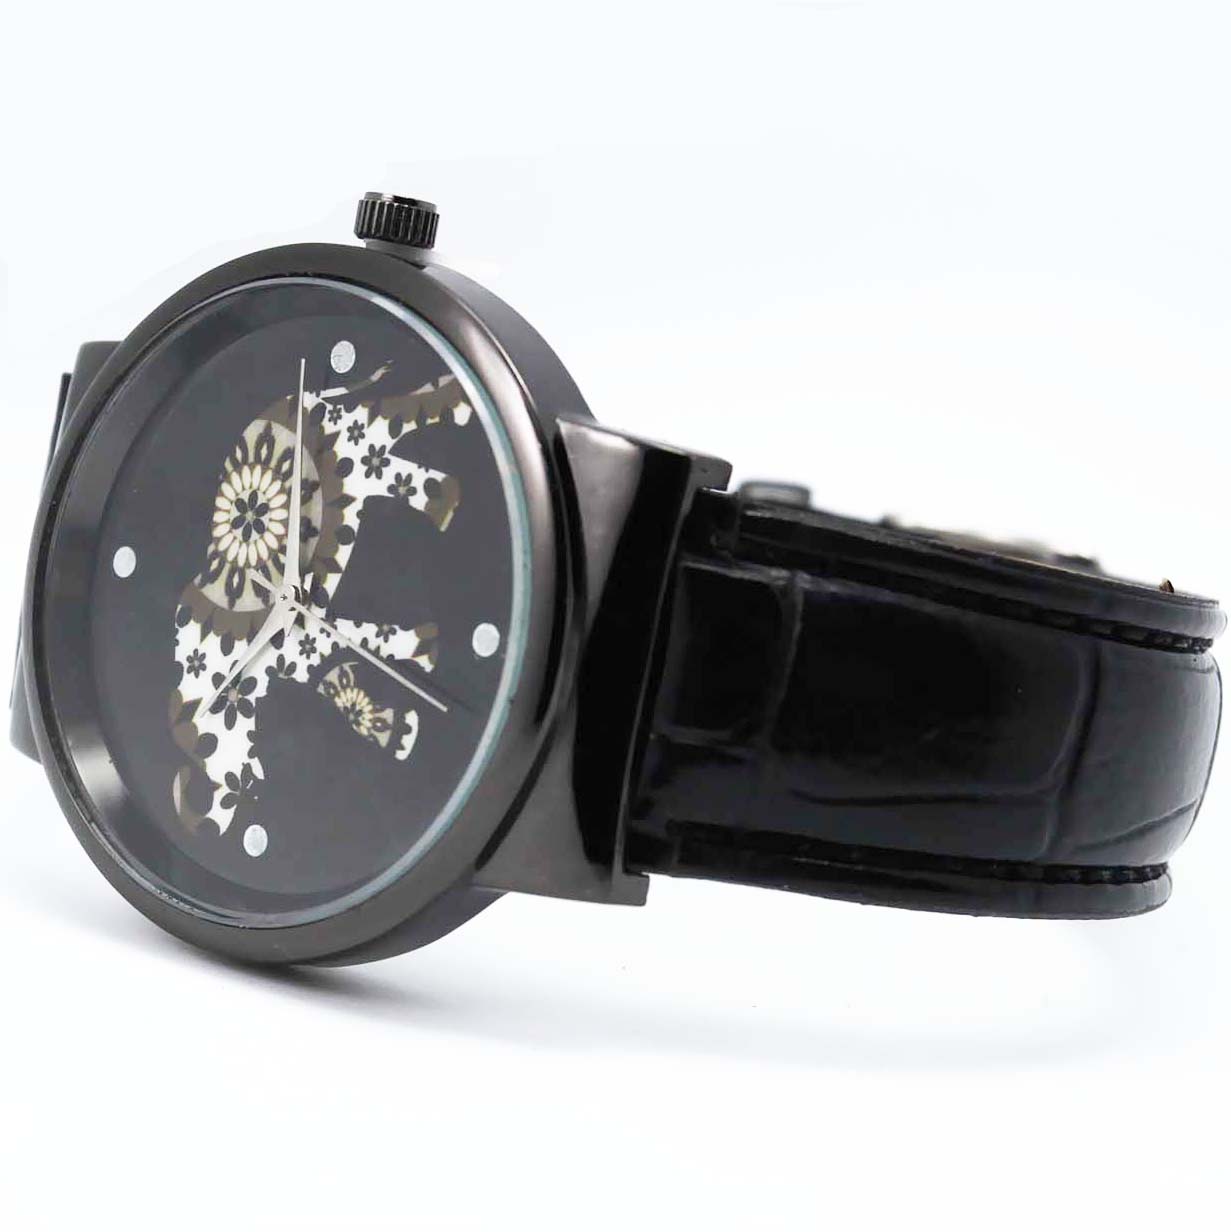 #02104Men's wristwatch quartz analog leather strap watch